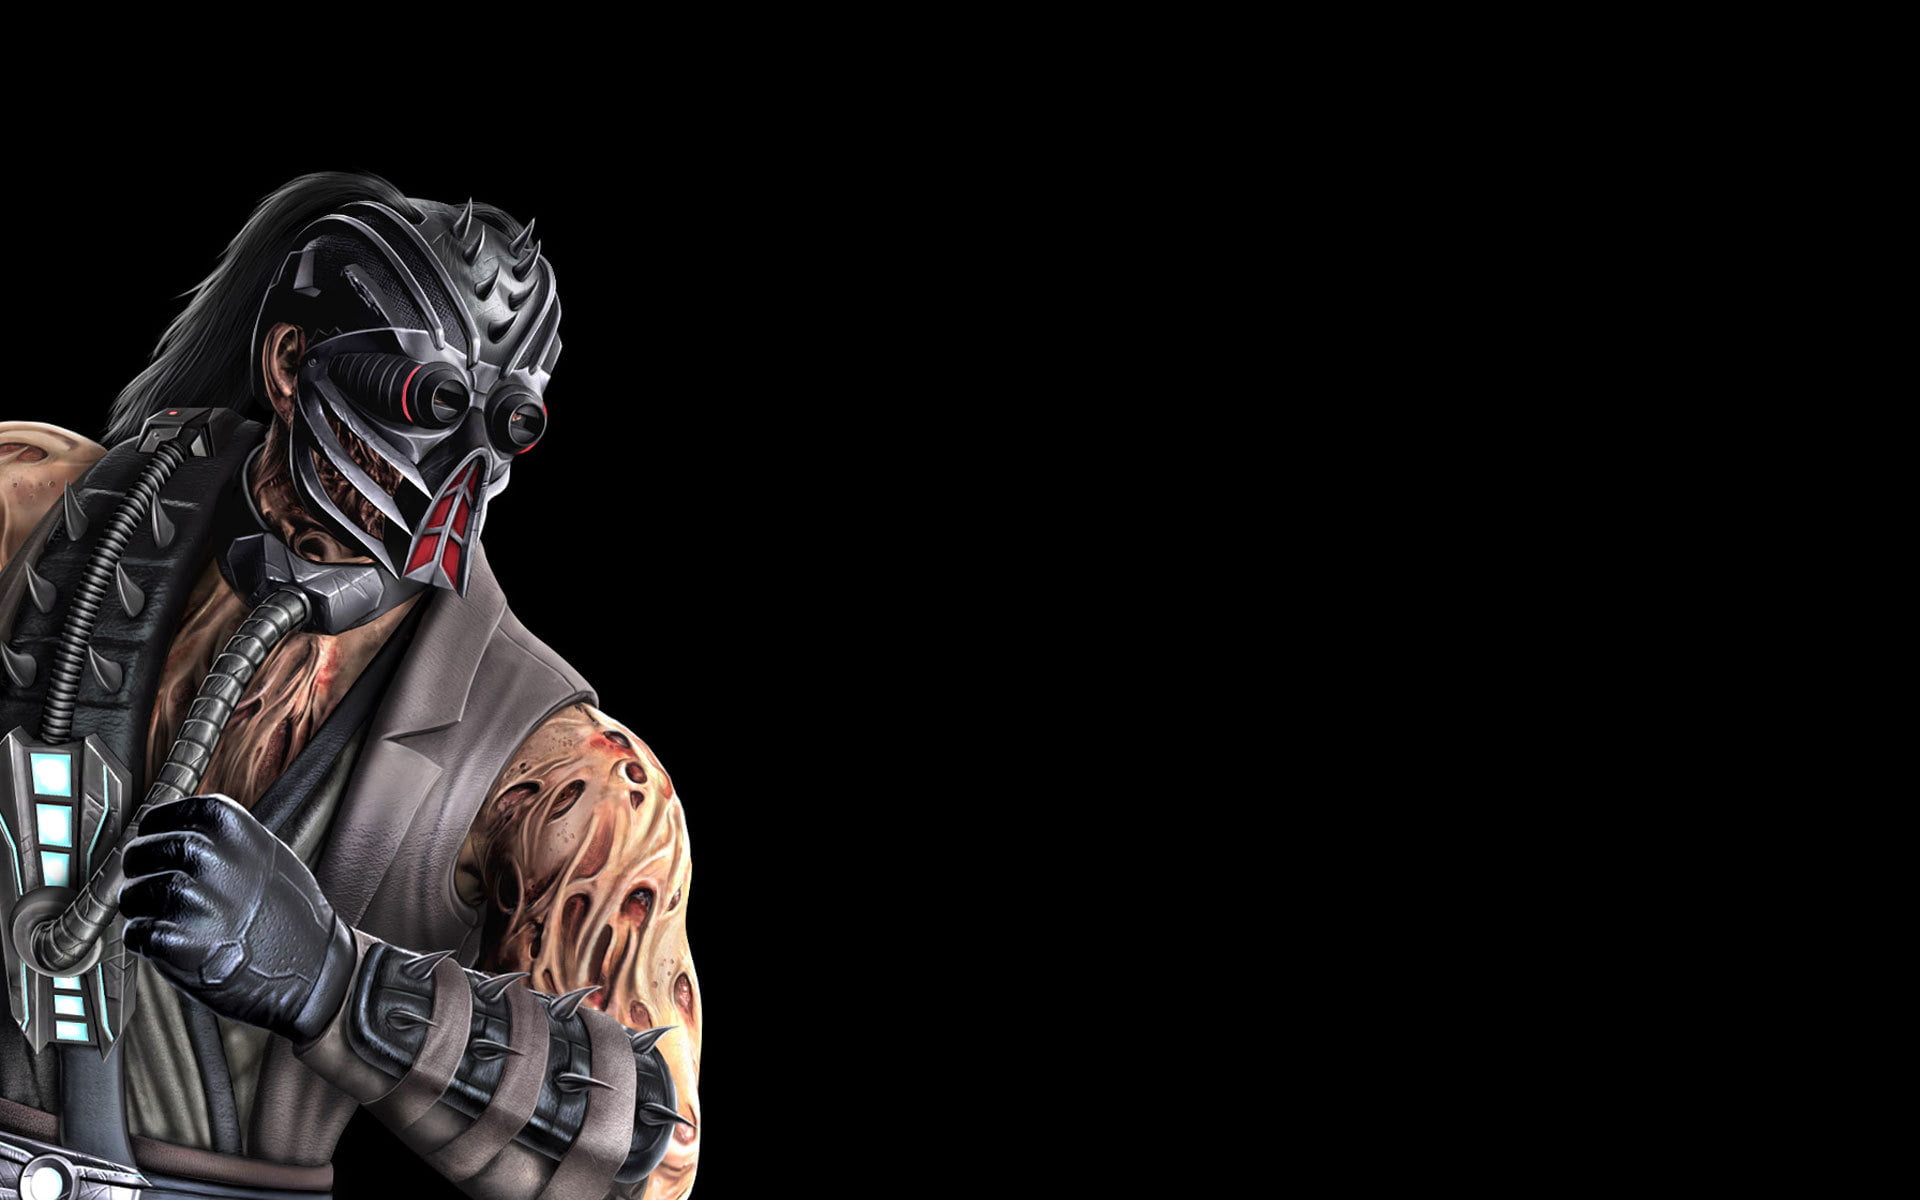 Kabal character of Mortal Kombat